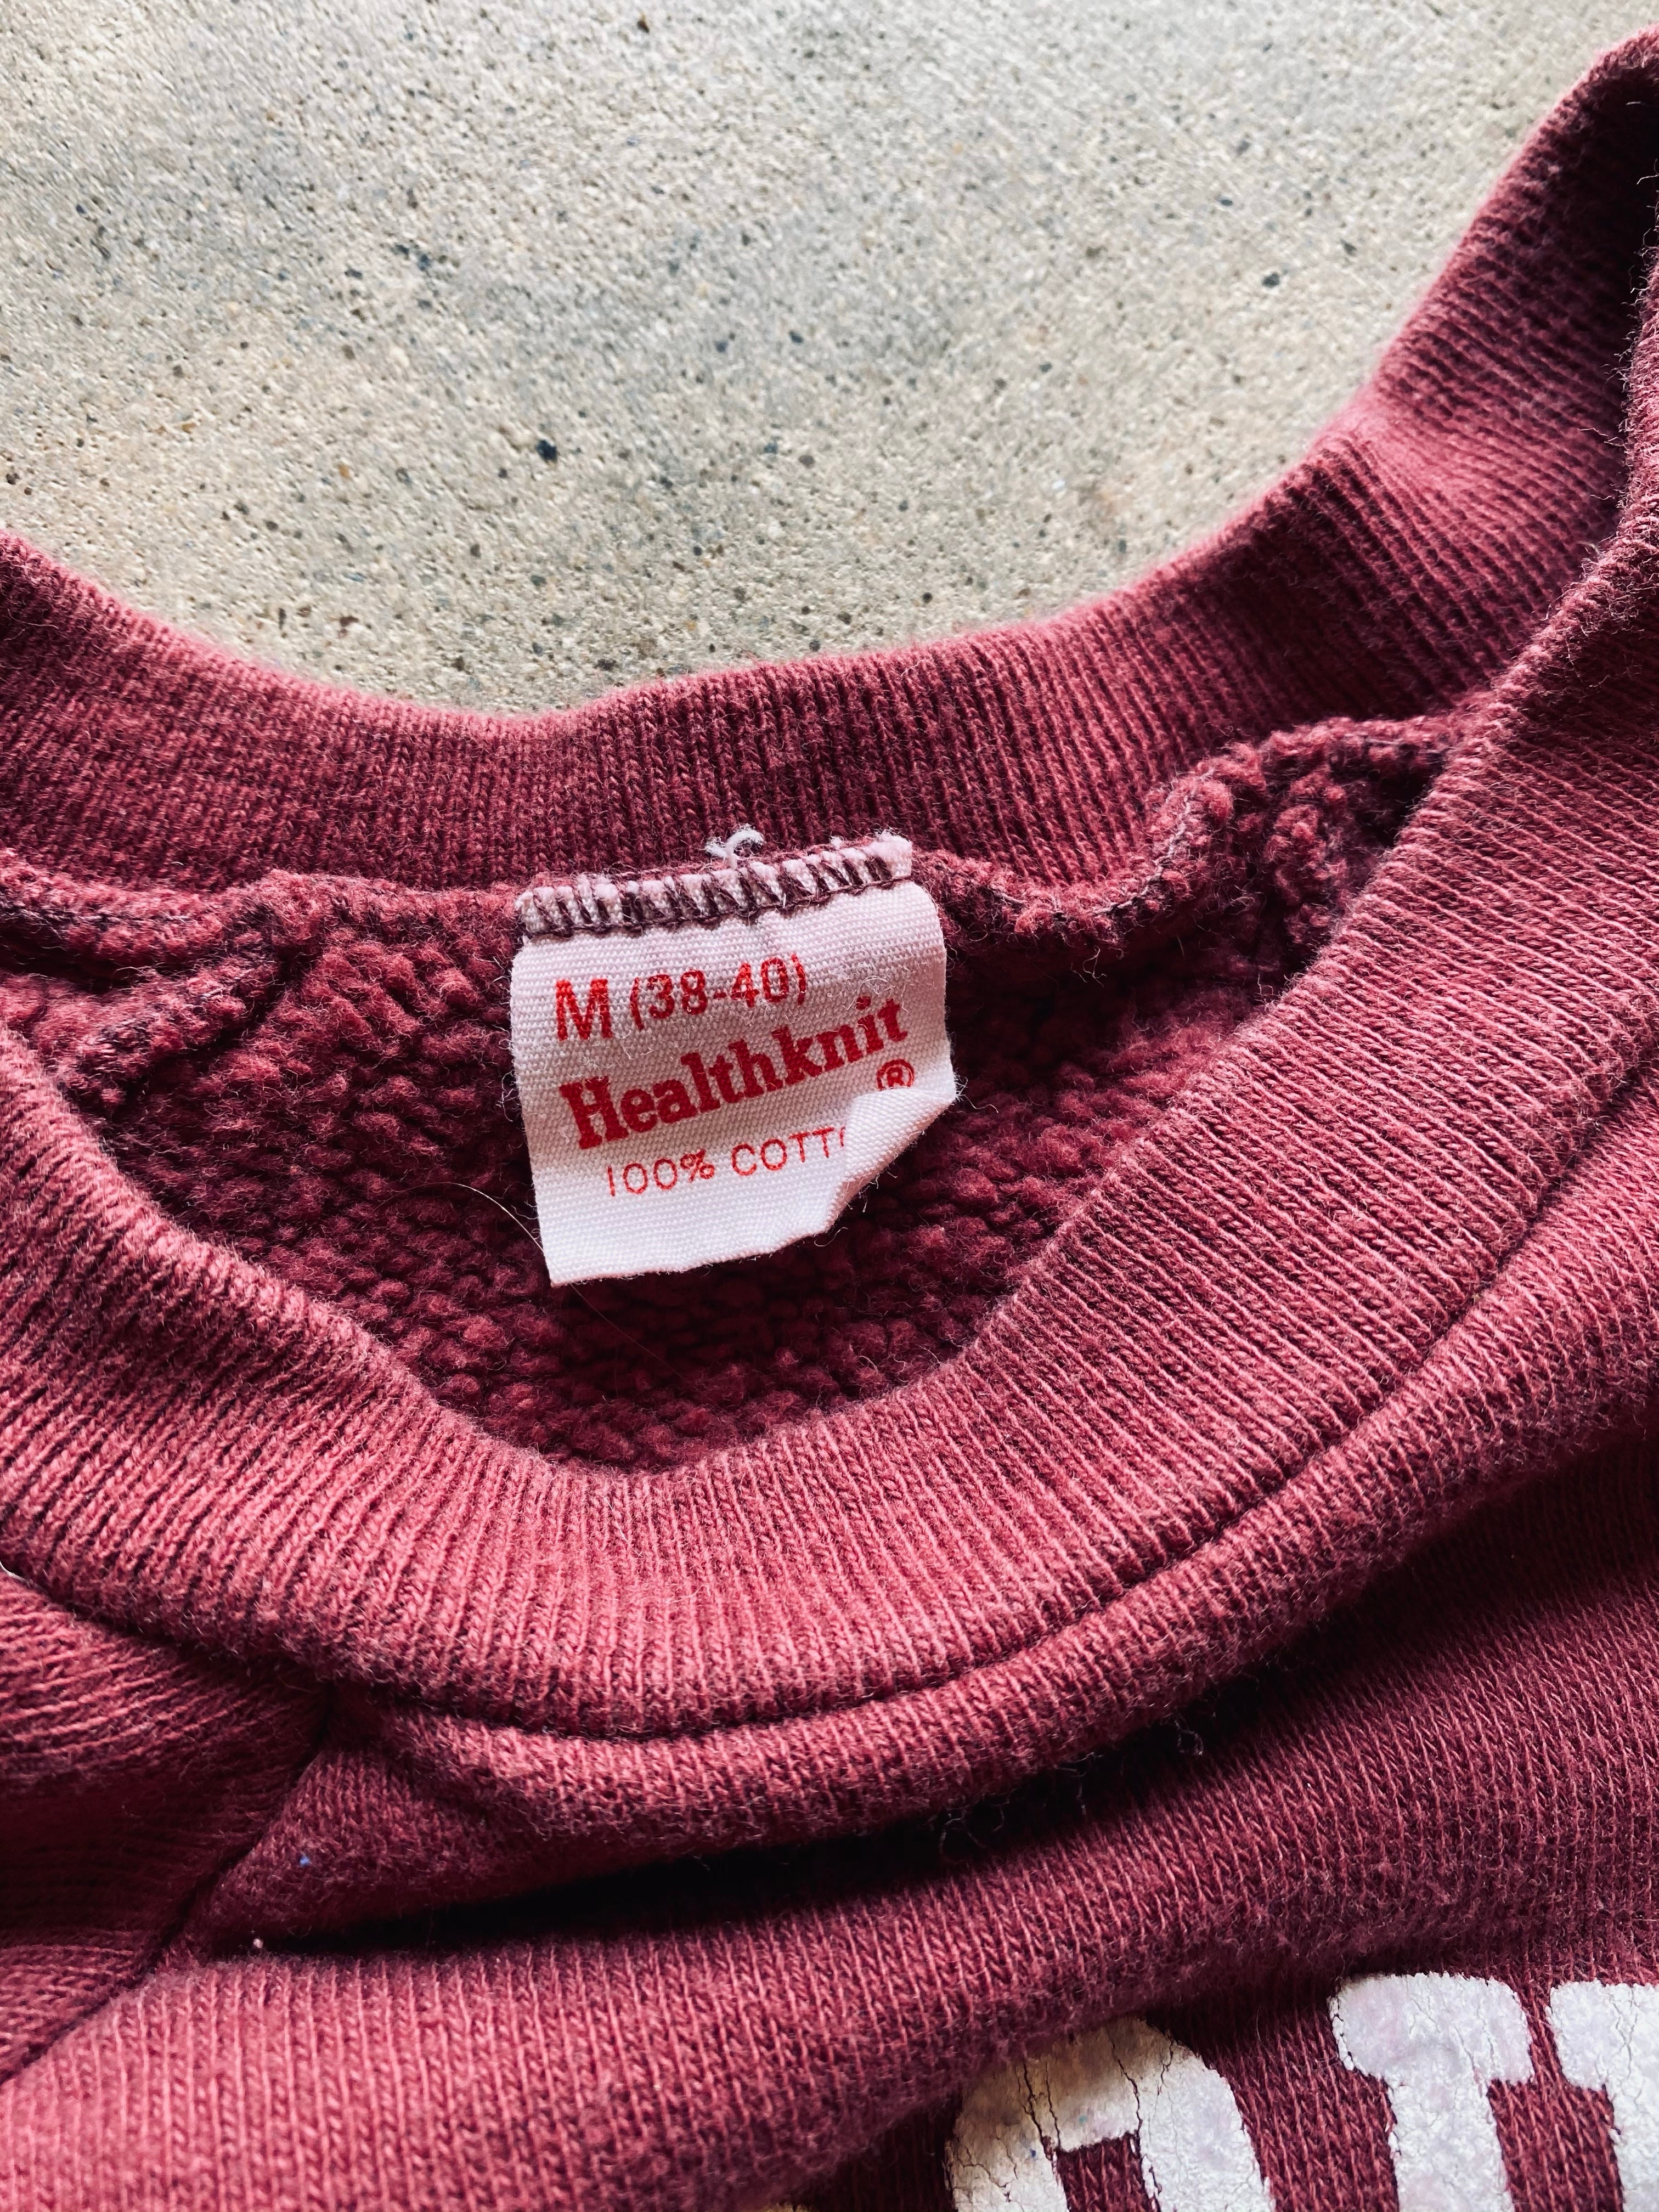 1960’s Healthknit Raglan S/S Sweatshirt